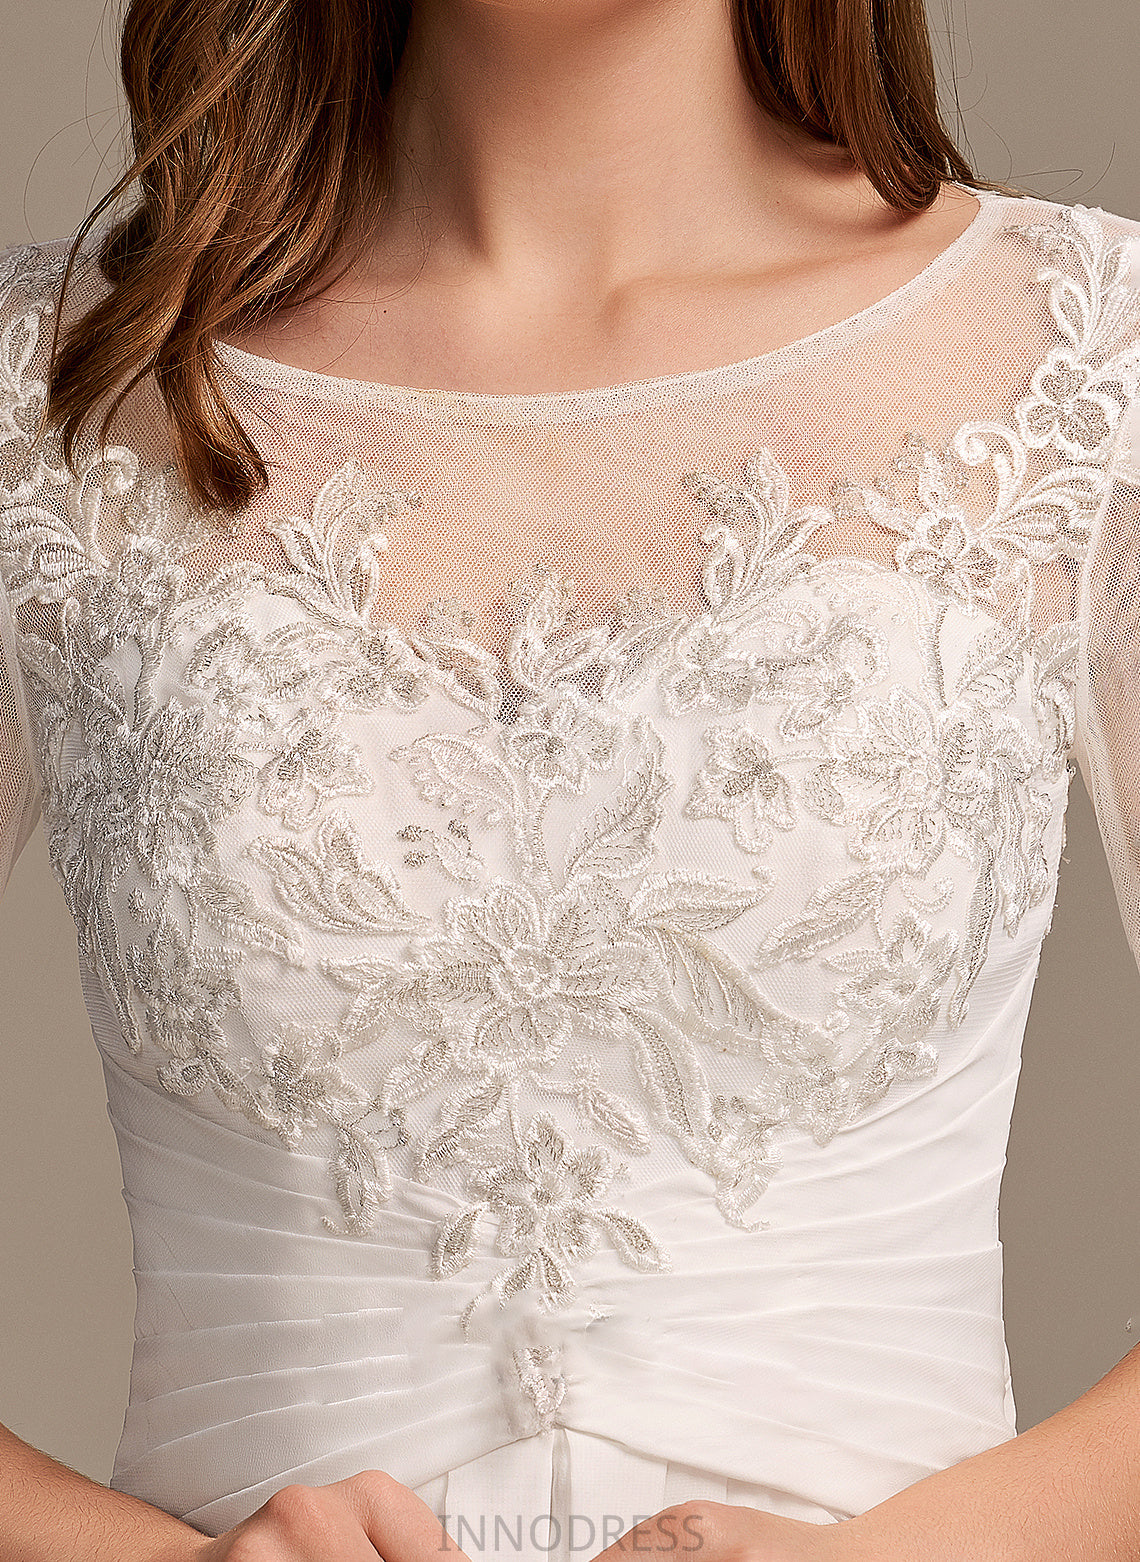 Makaila Wedding Dresses Dress A-Line Wedding Asymmetrical Lace With Illusion